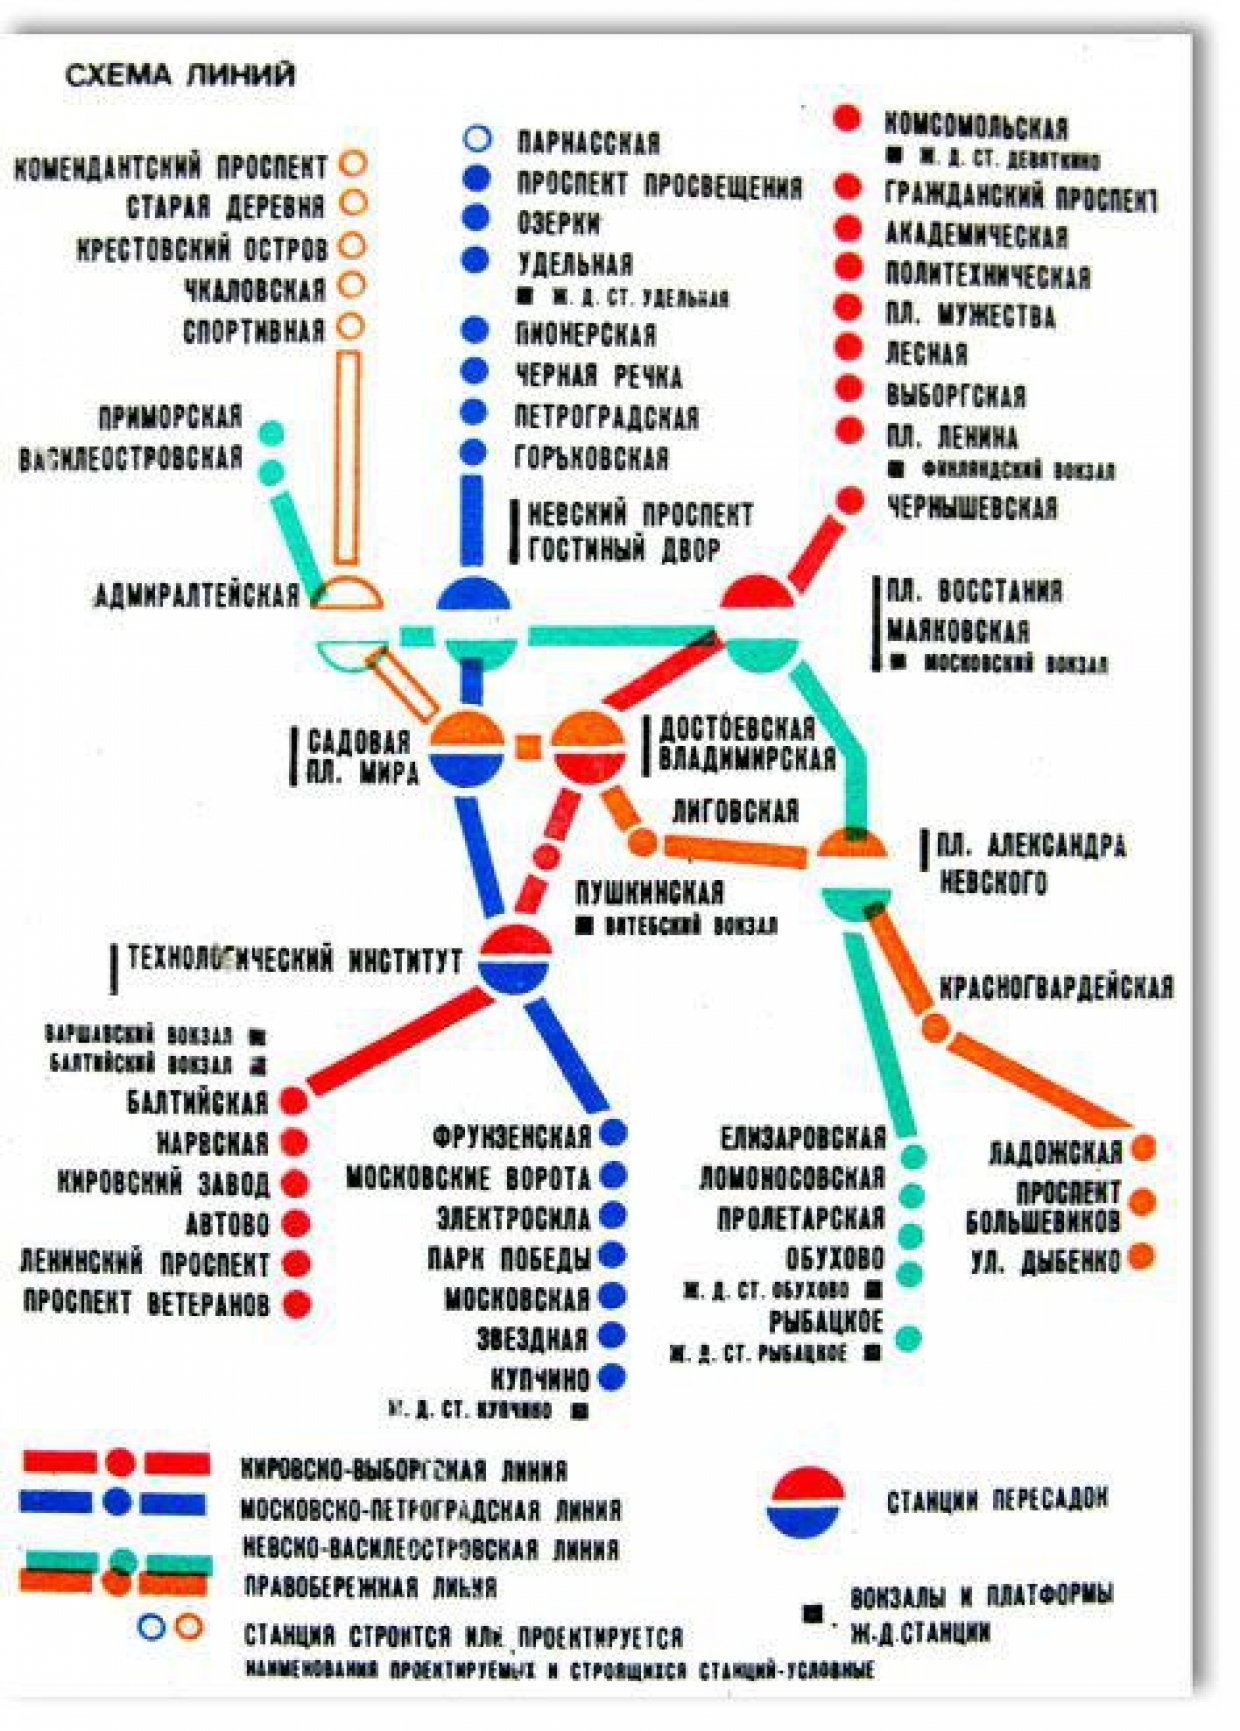 метро санкт петербурга схема новая 2022 года